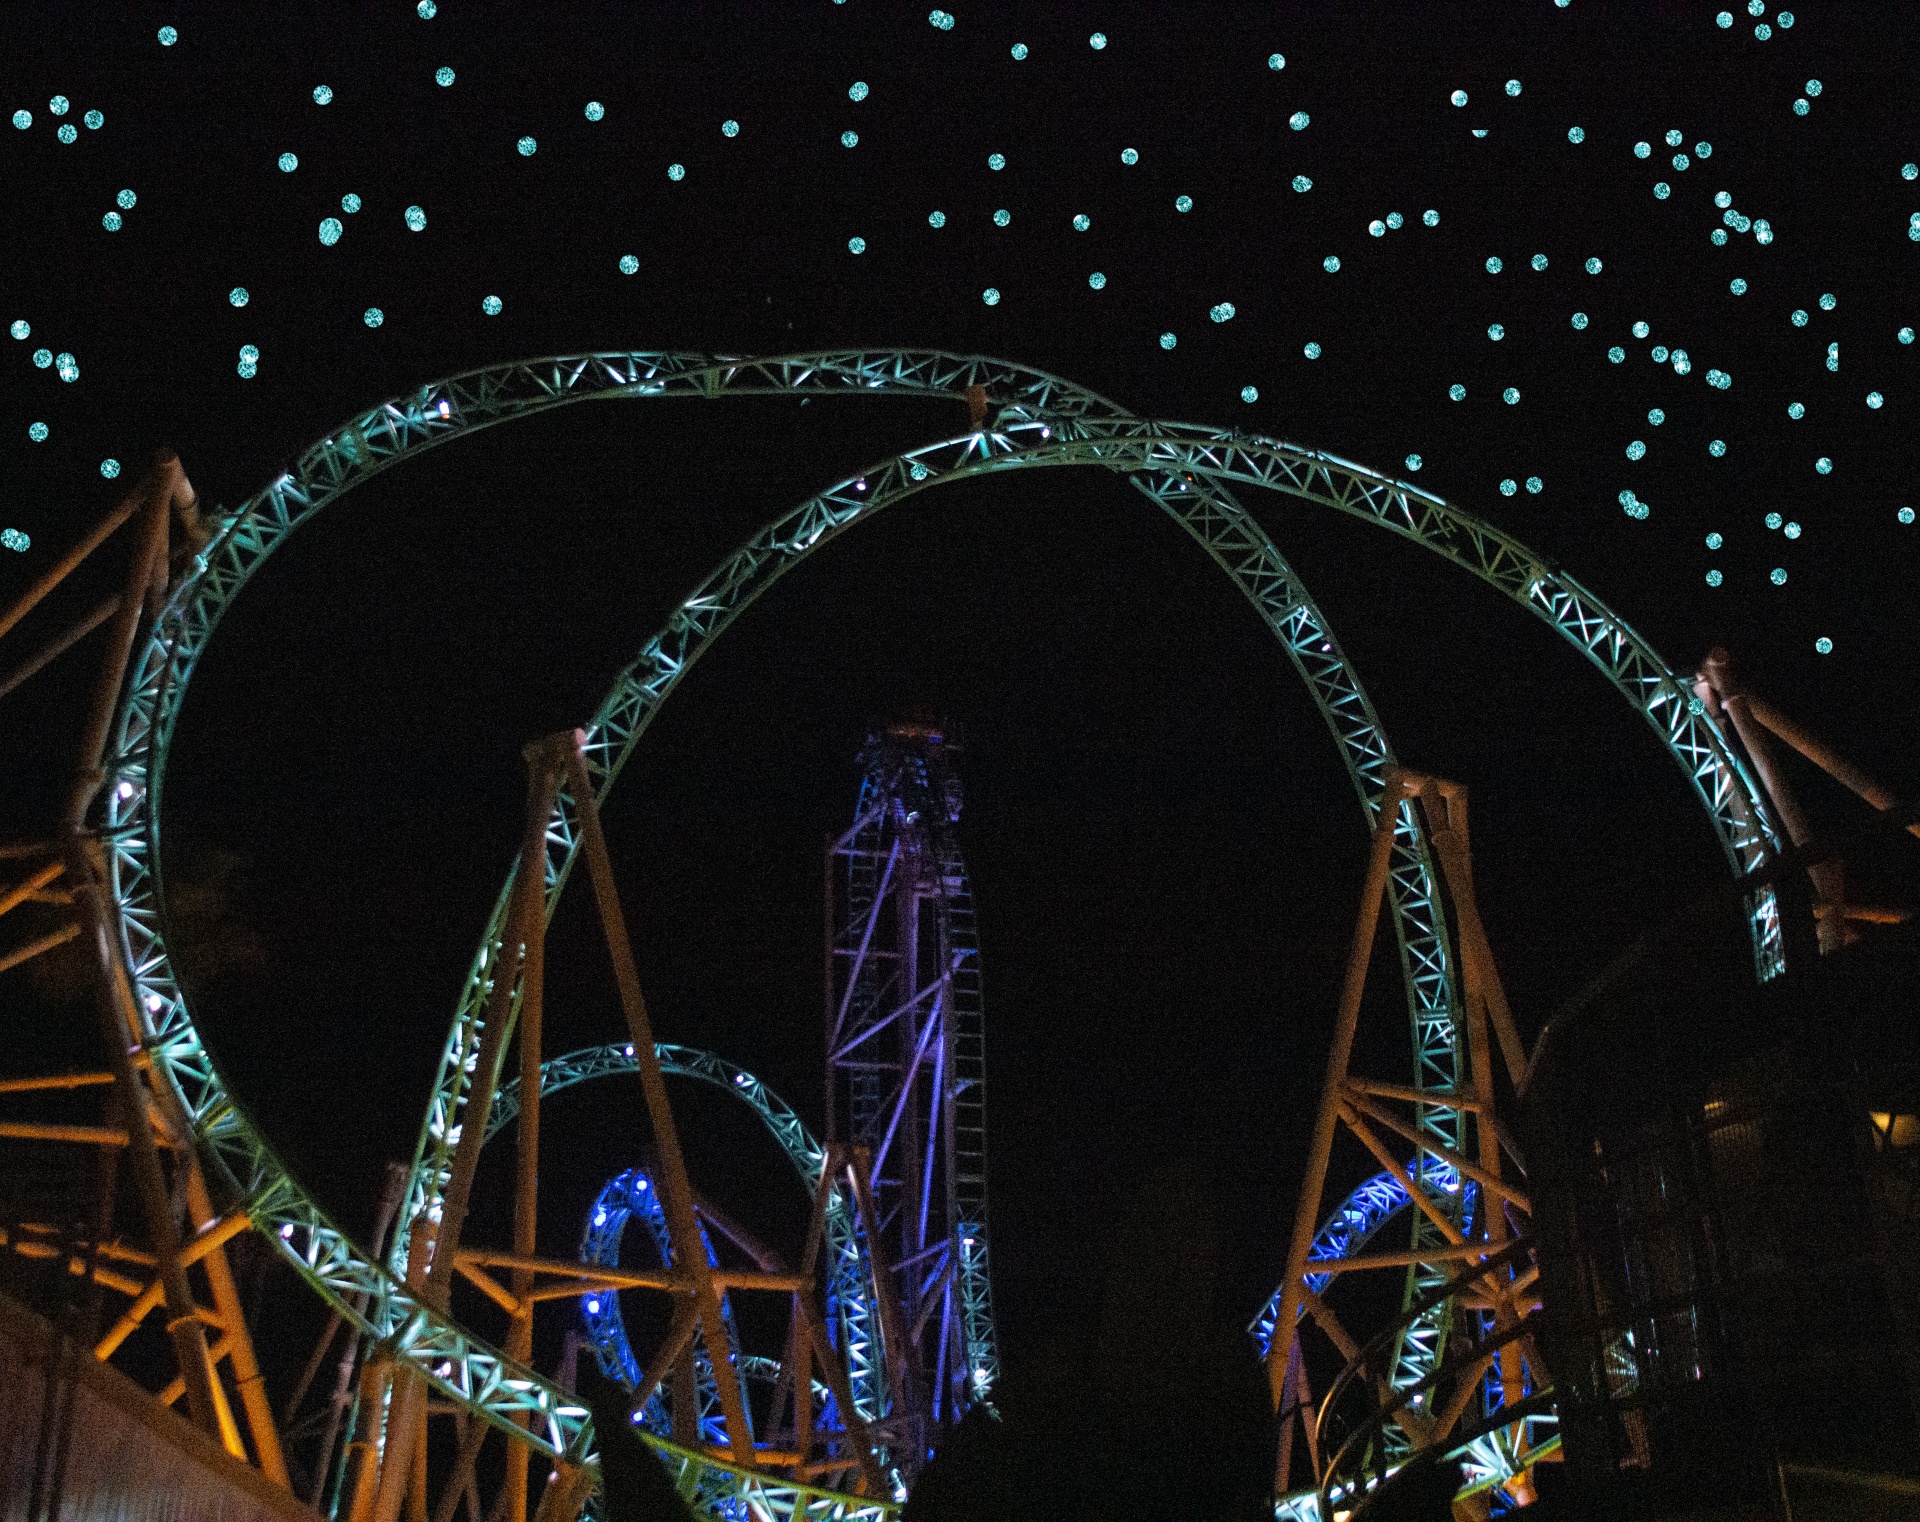 Roller Coaster Glows At Night